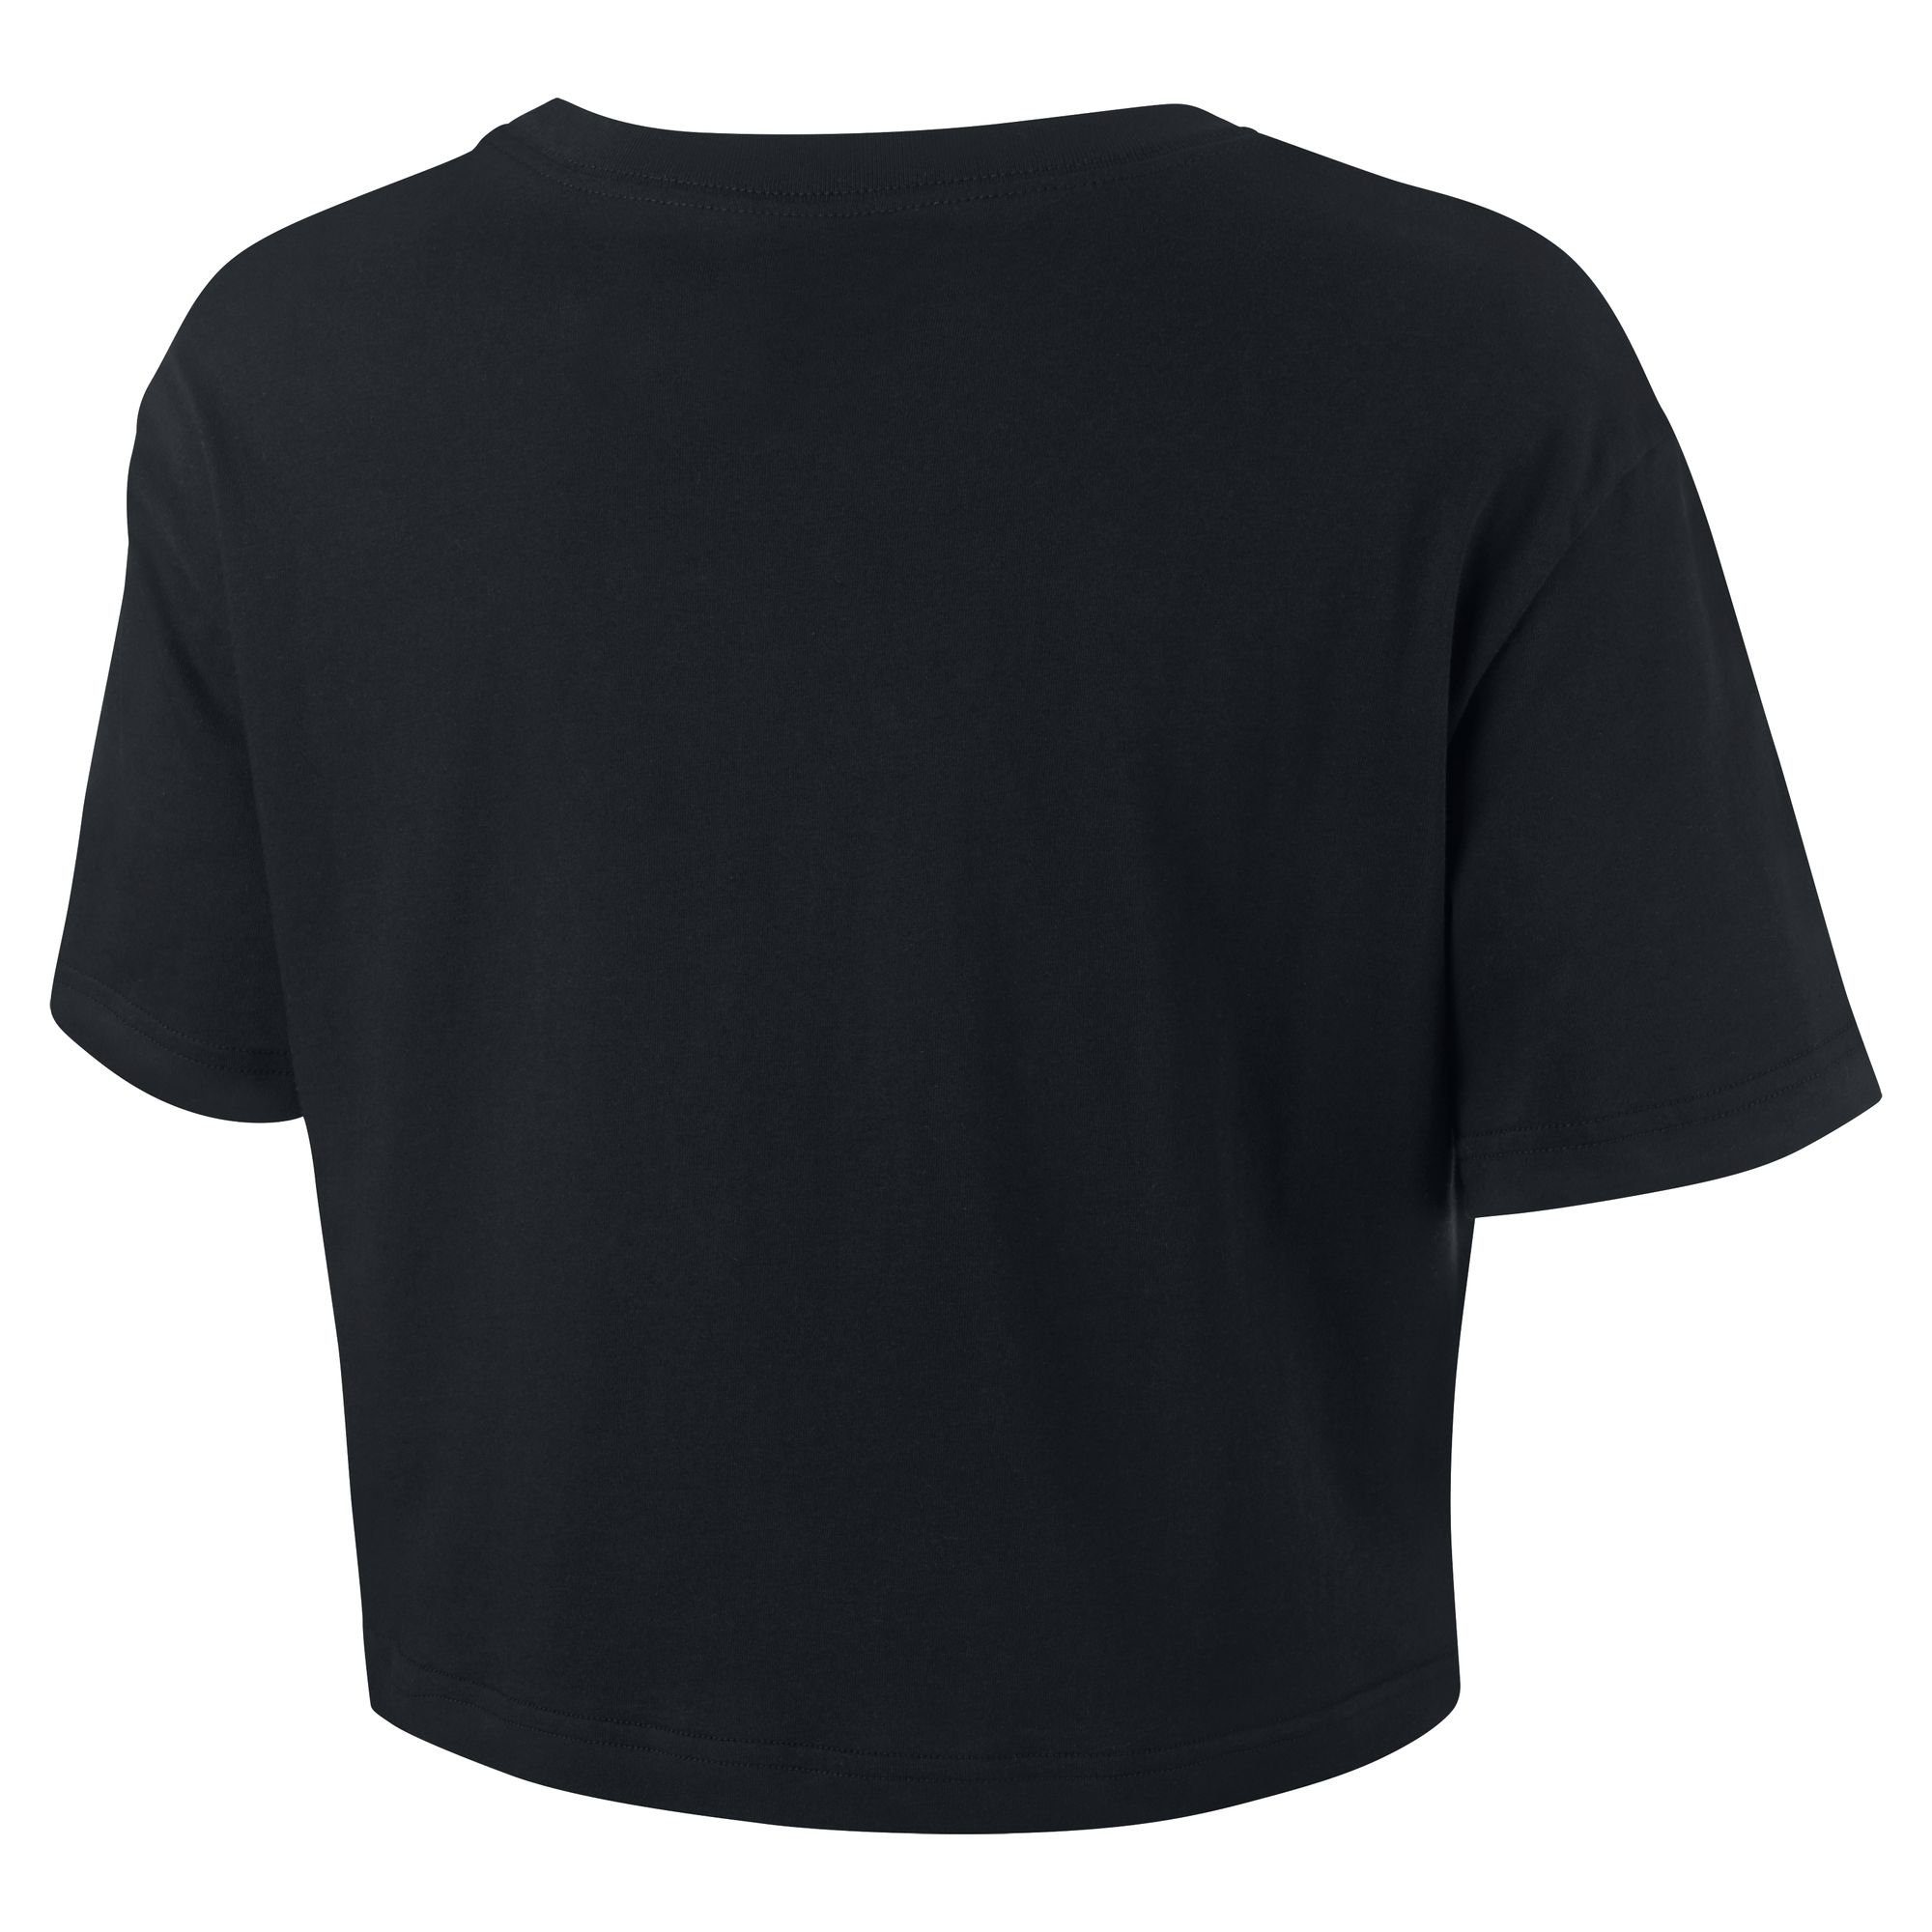 CROPPED T-Shirt ESSENTIAL Nike WOMEN'S T-SHIRT Sportswear LOGO schwarzweiss